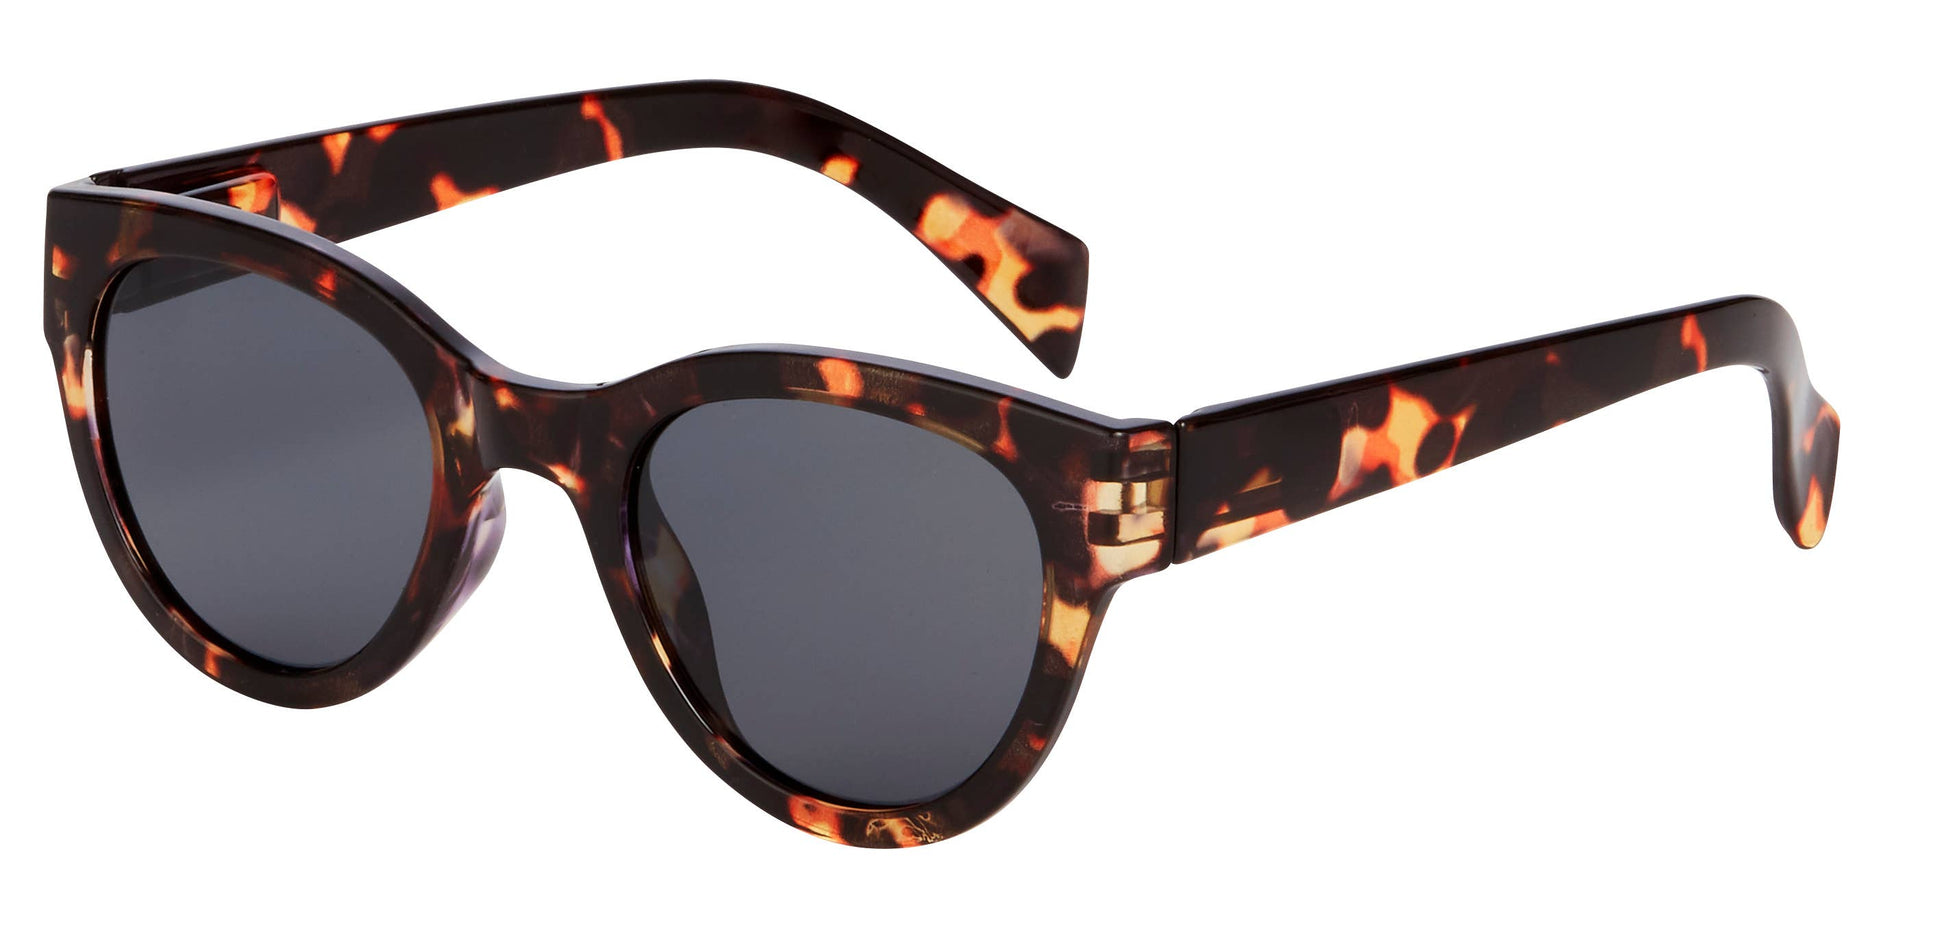 Dupont Sunglasses: Granite Core I Heart Eyewear